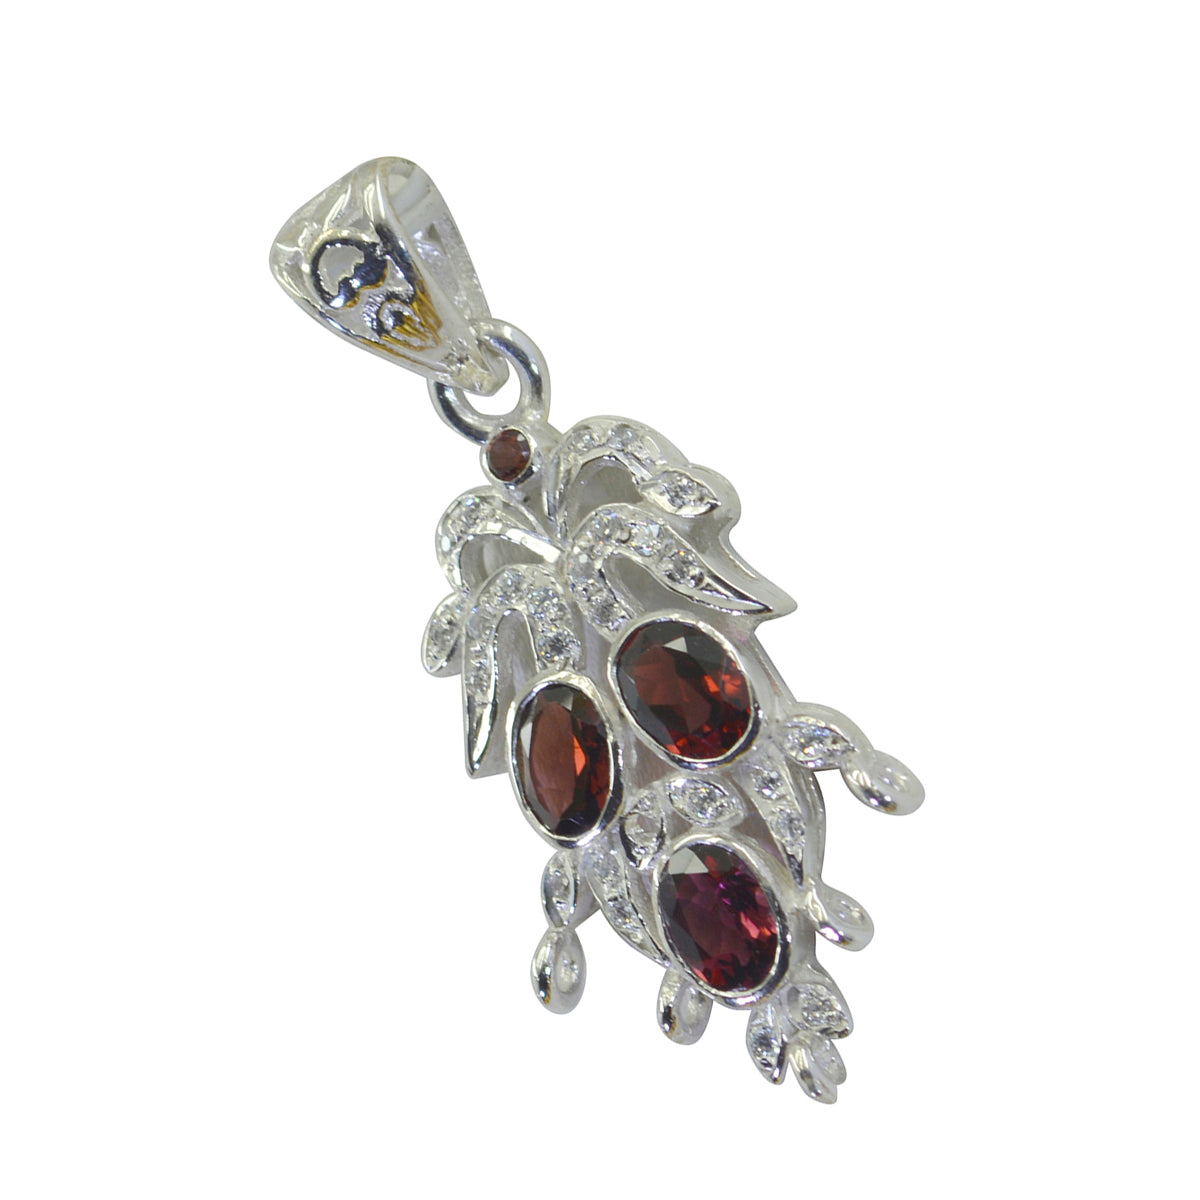 Riyo Pleasing Gemstone Oval Faceted Red Garnet Sterling Silver Pendant Gift For Women